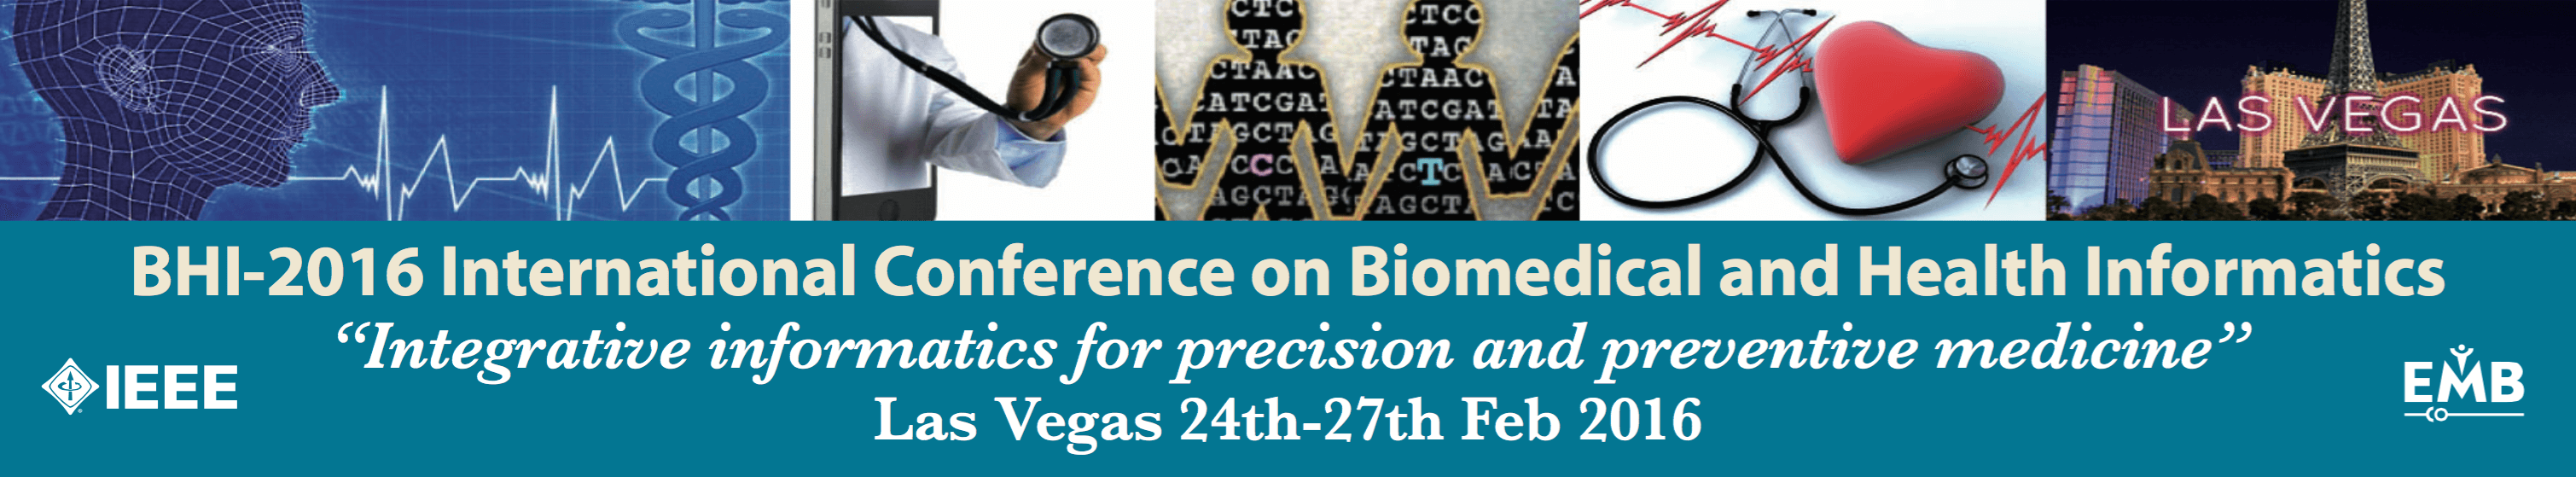 BHI 2016 – International Conference on Biomedical and Health Informatics